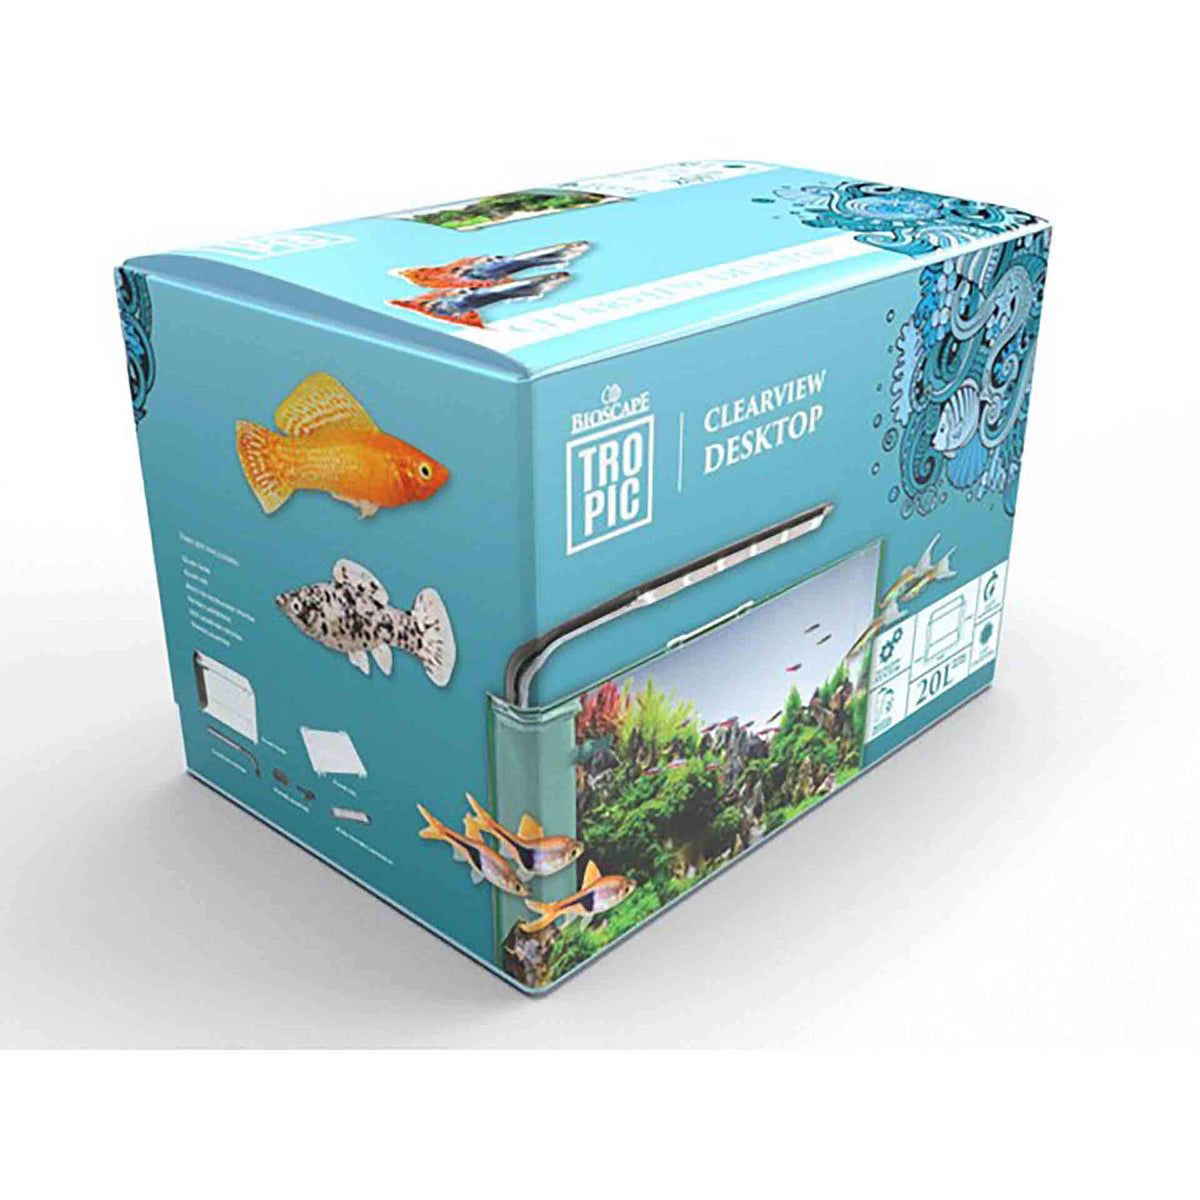 Bioscape Tropic Clearview Desktop Aquarium 20L - In Store Pick Up Only